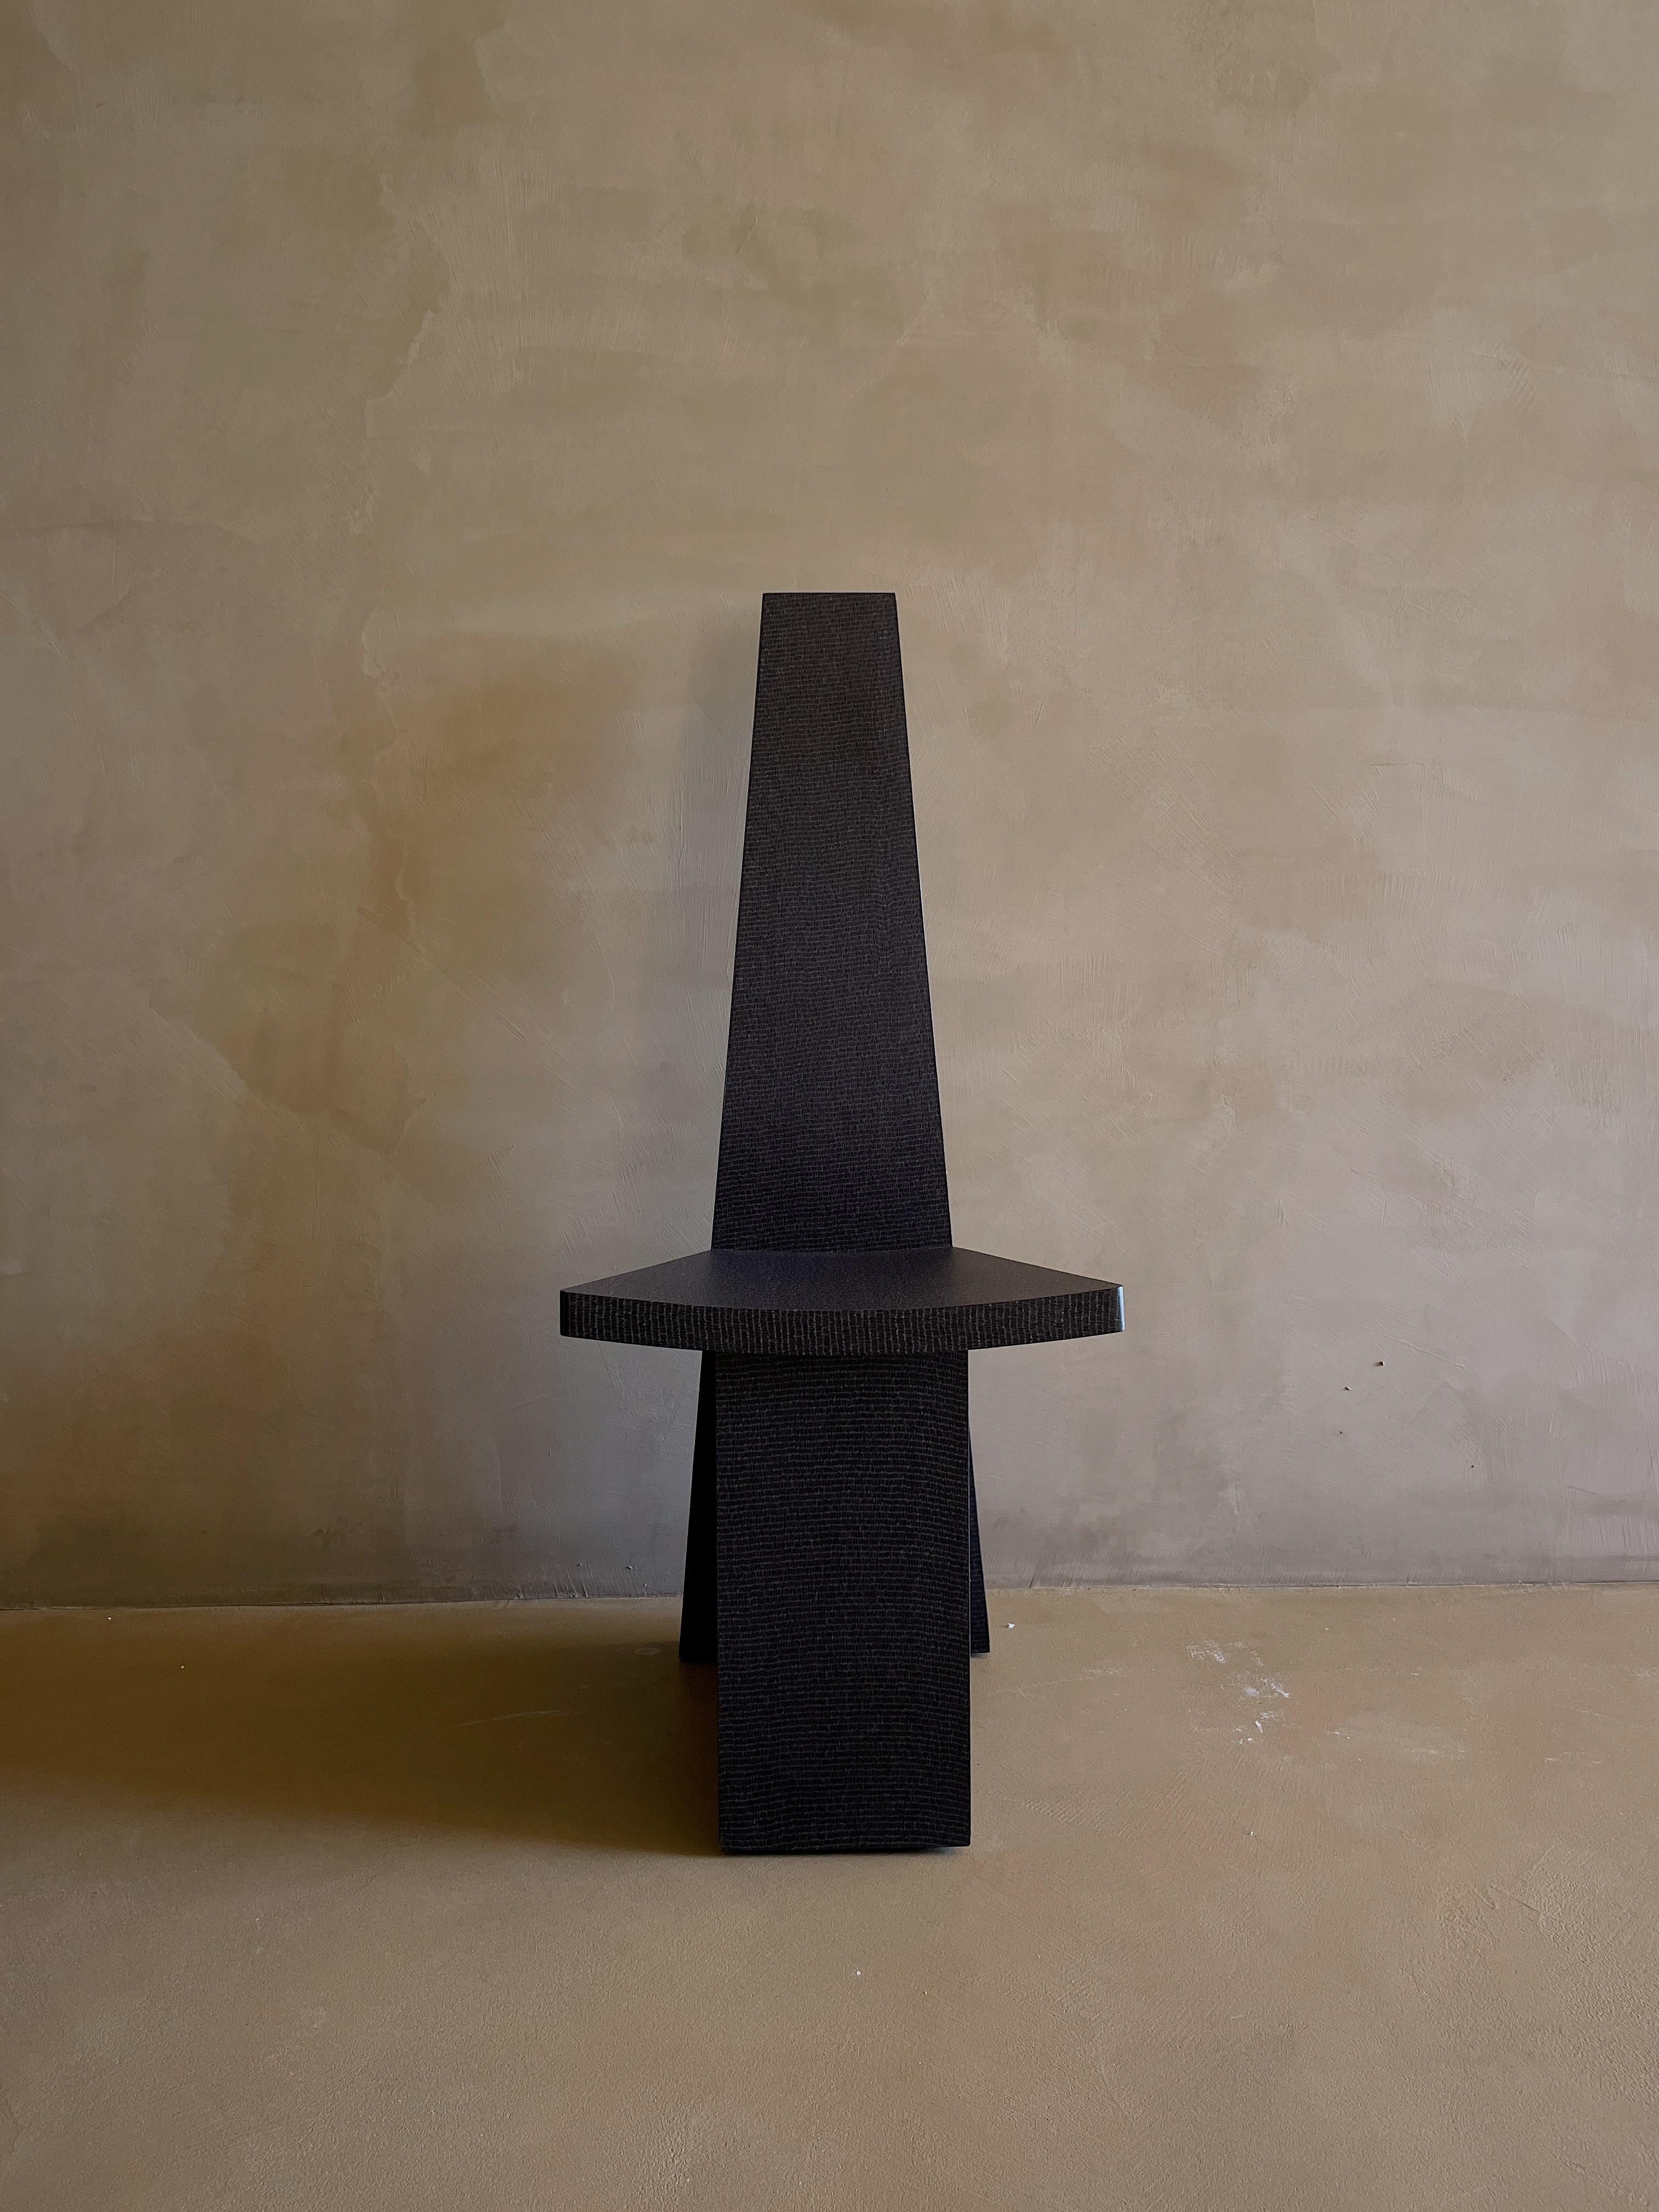 Samurai Sword Chair by Karstudio 2